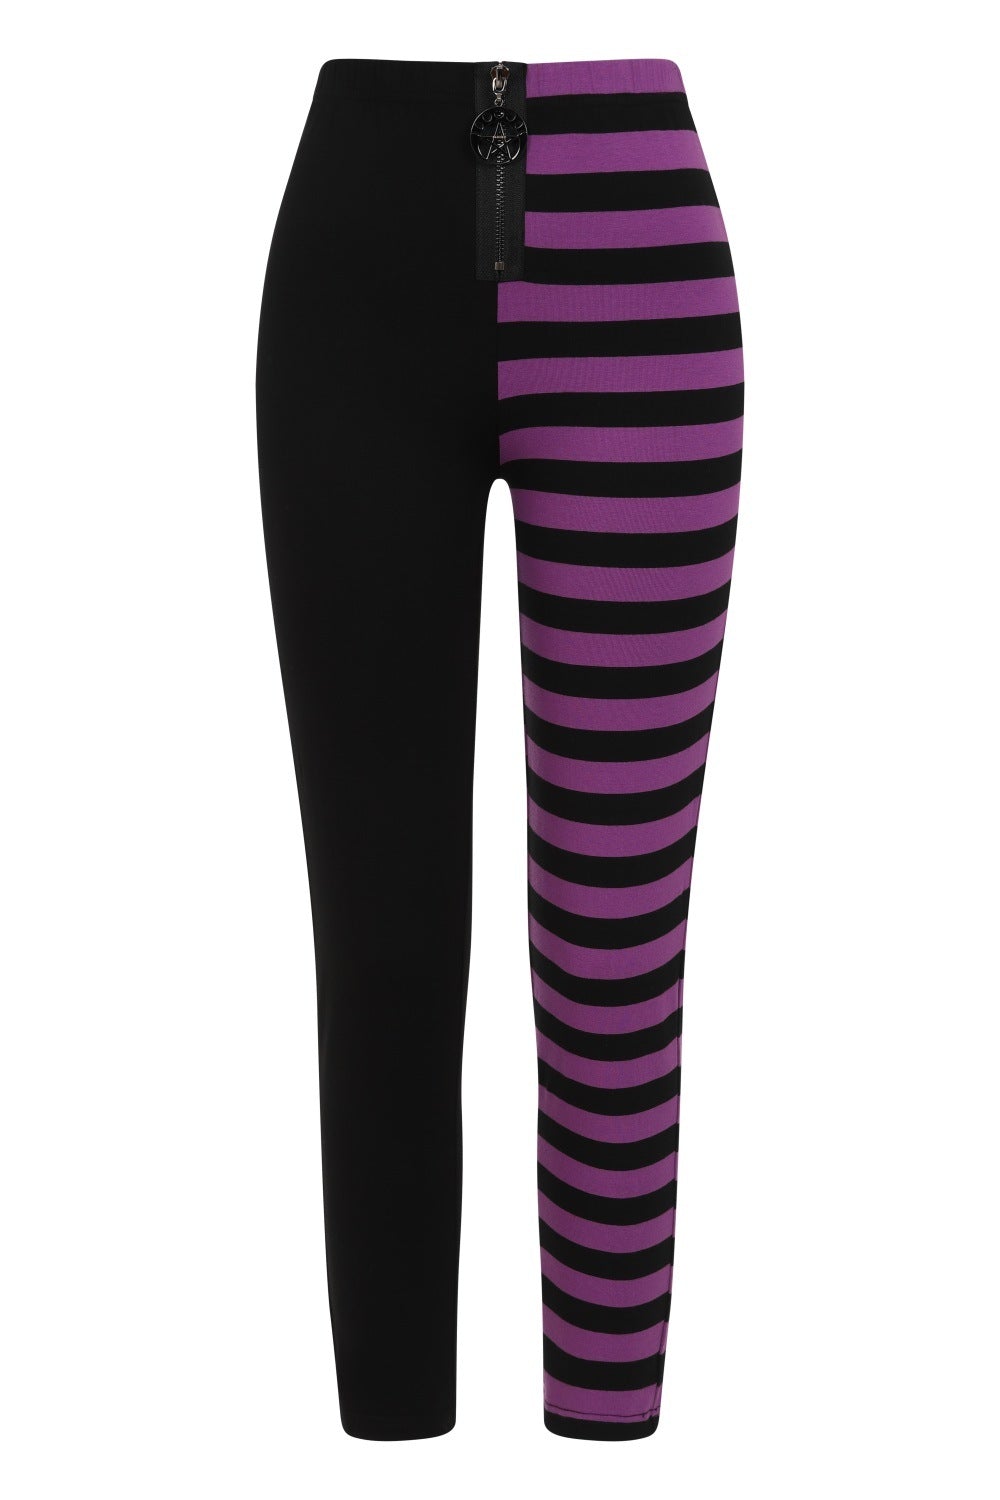 High waisted leggings with one black leg and one purple striped leg. Pentagram zip detail. 